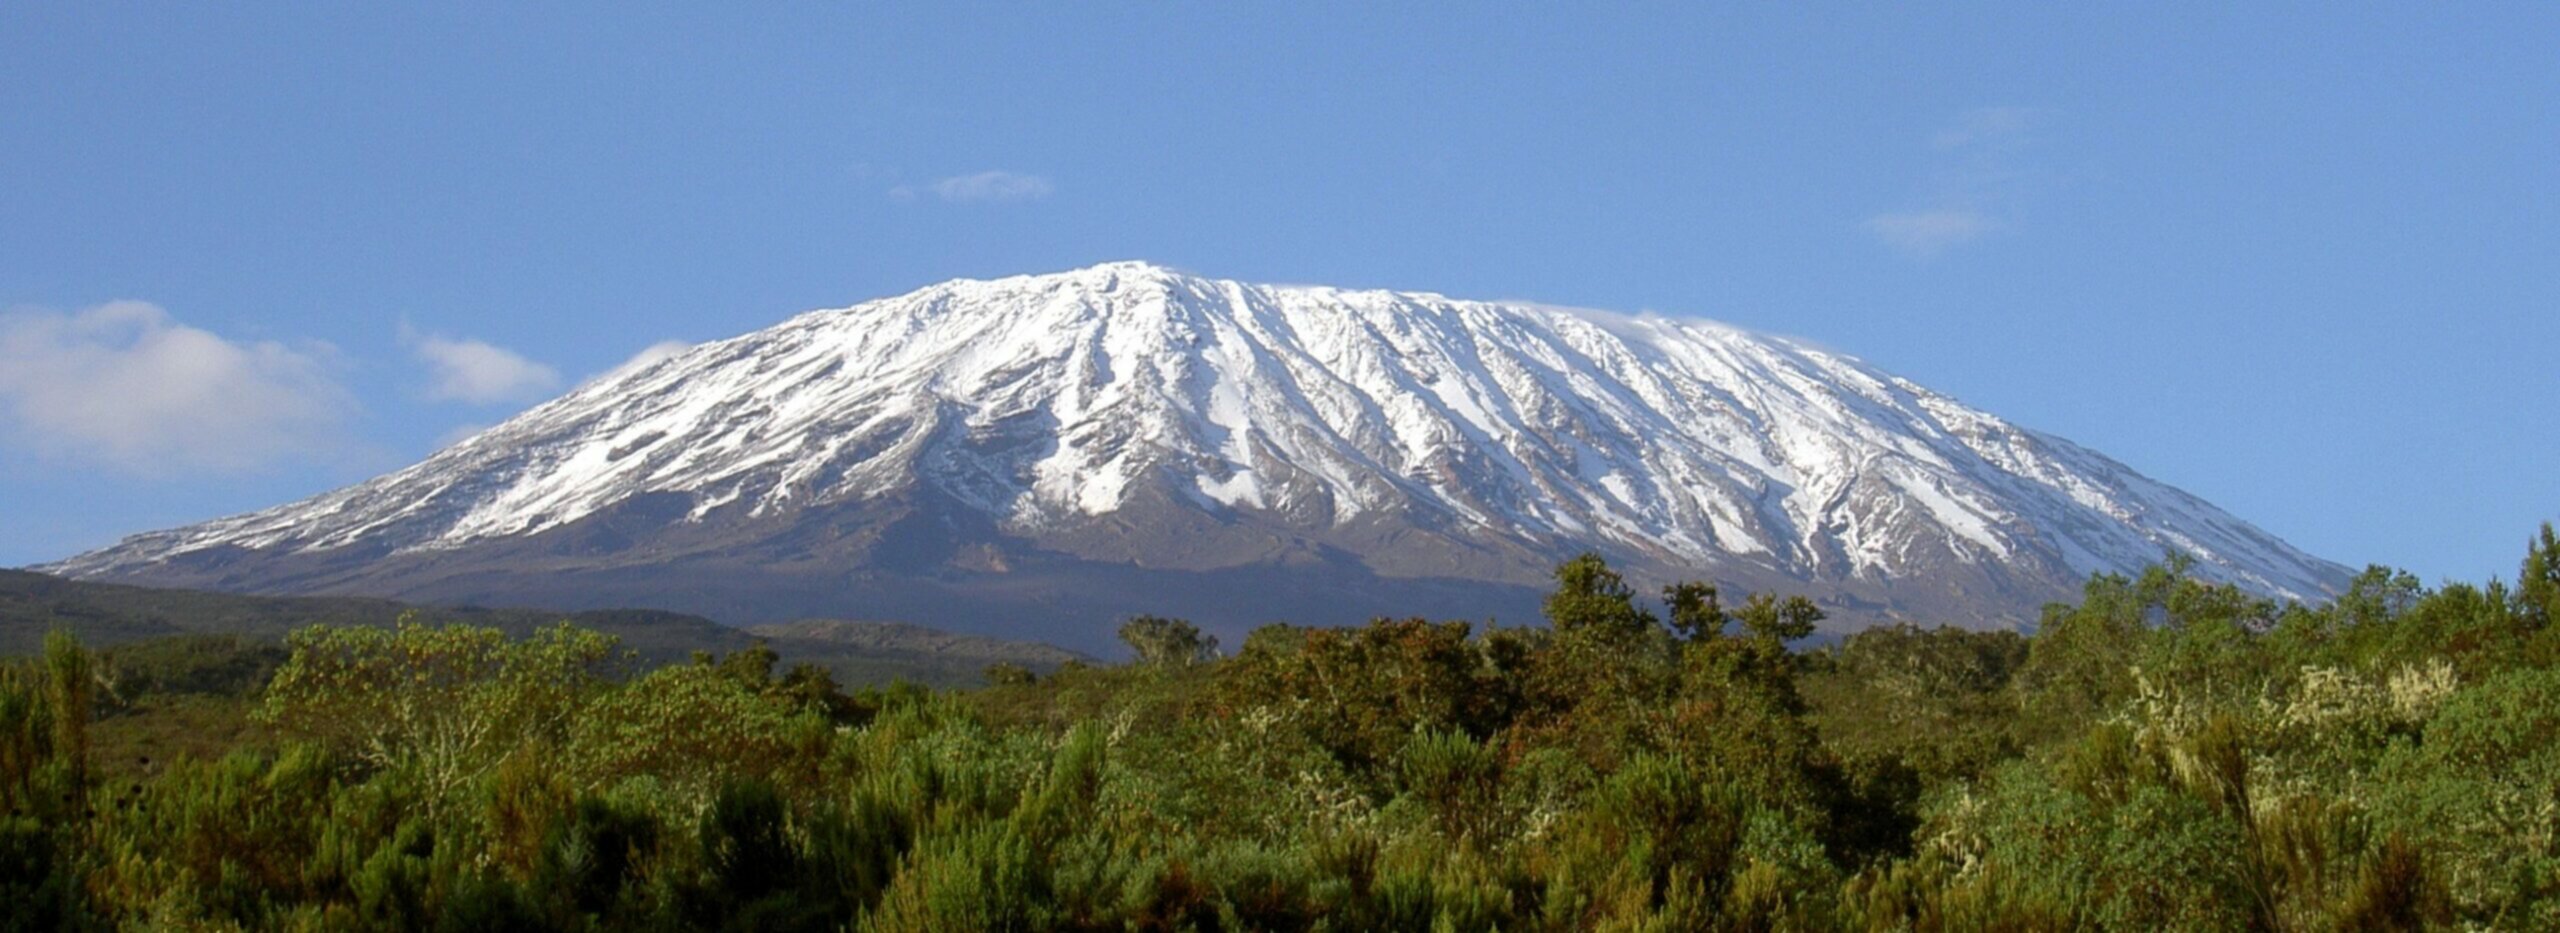 Ambitious Dave Climbs Kilimanjaro to Raise £3000